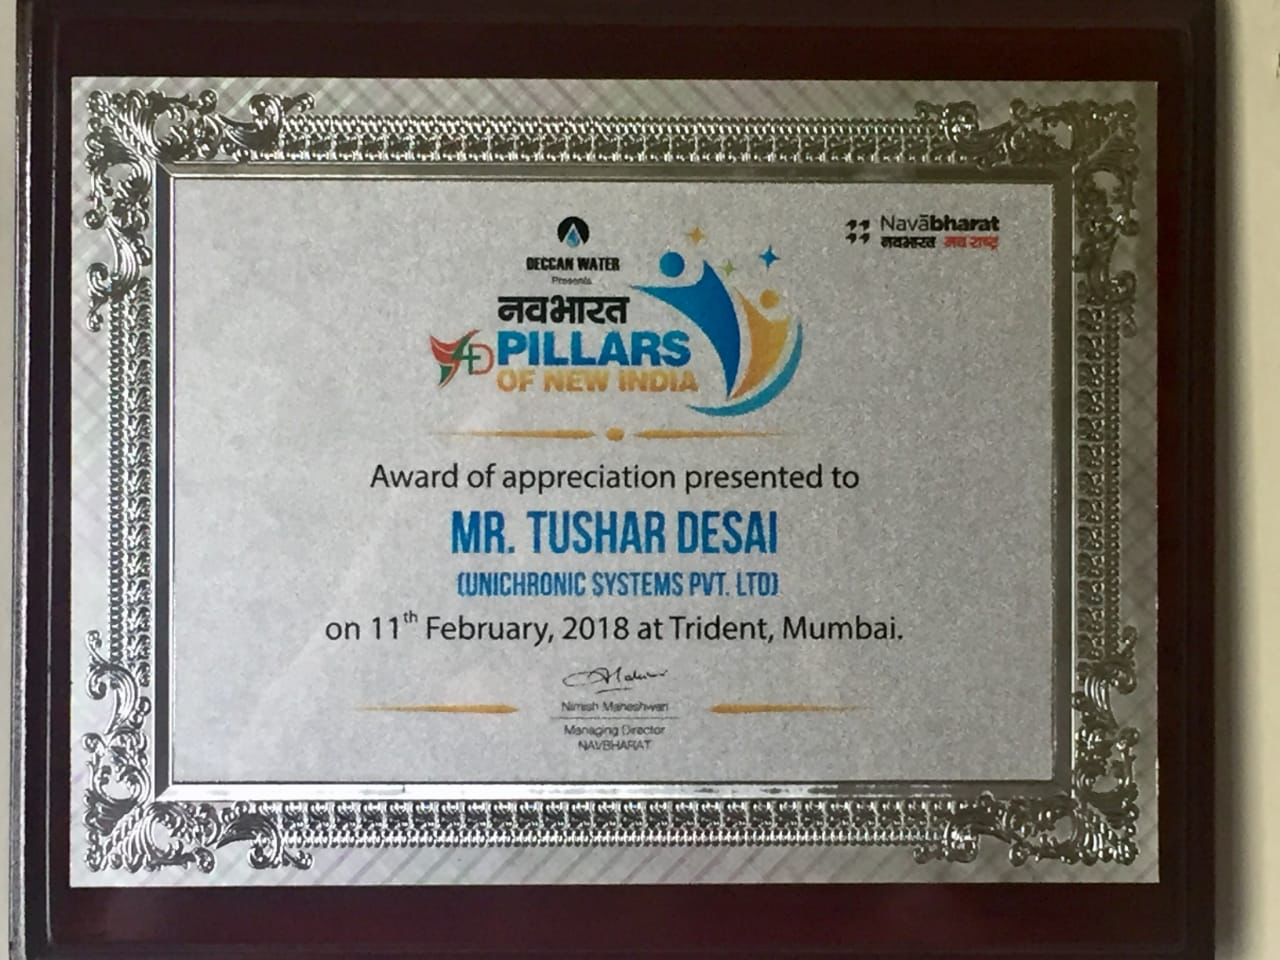 NewIndiaAwards Certificate